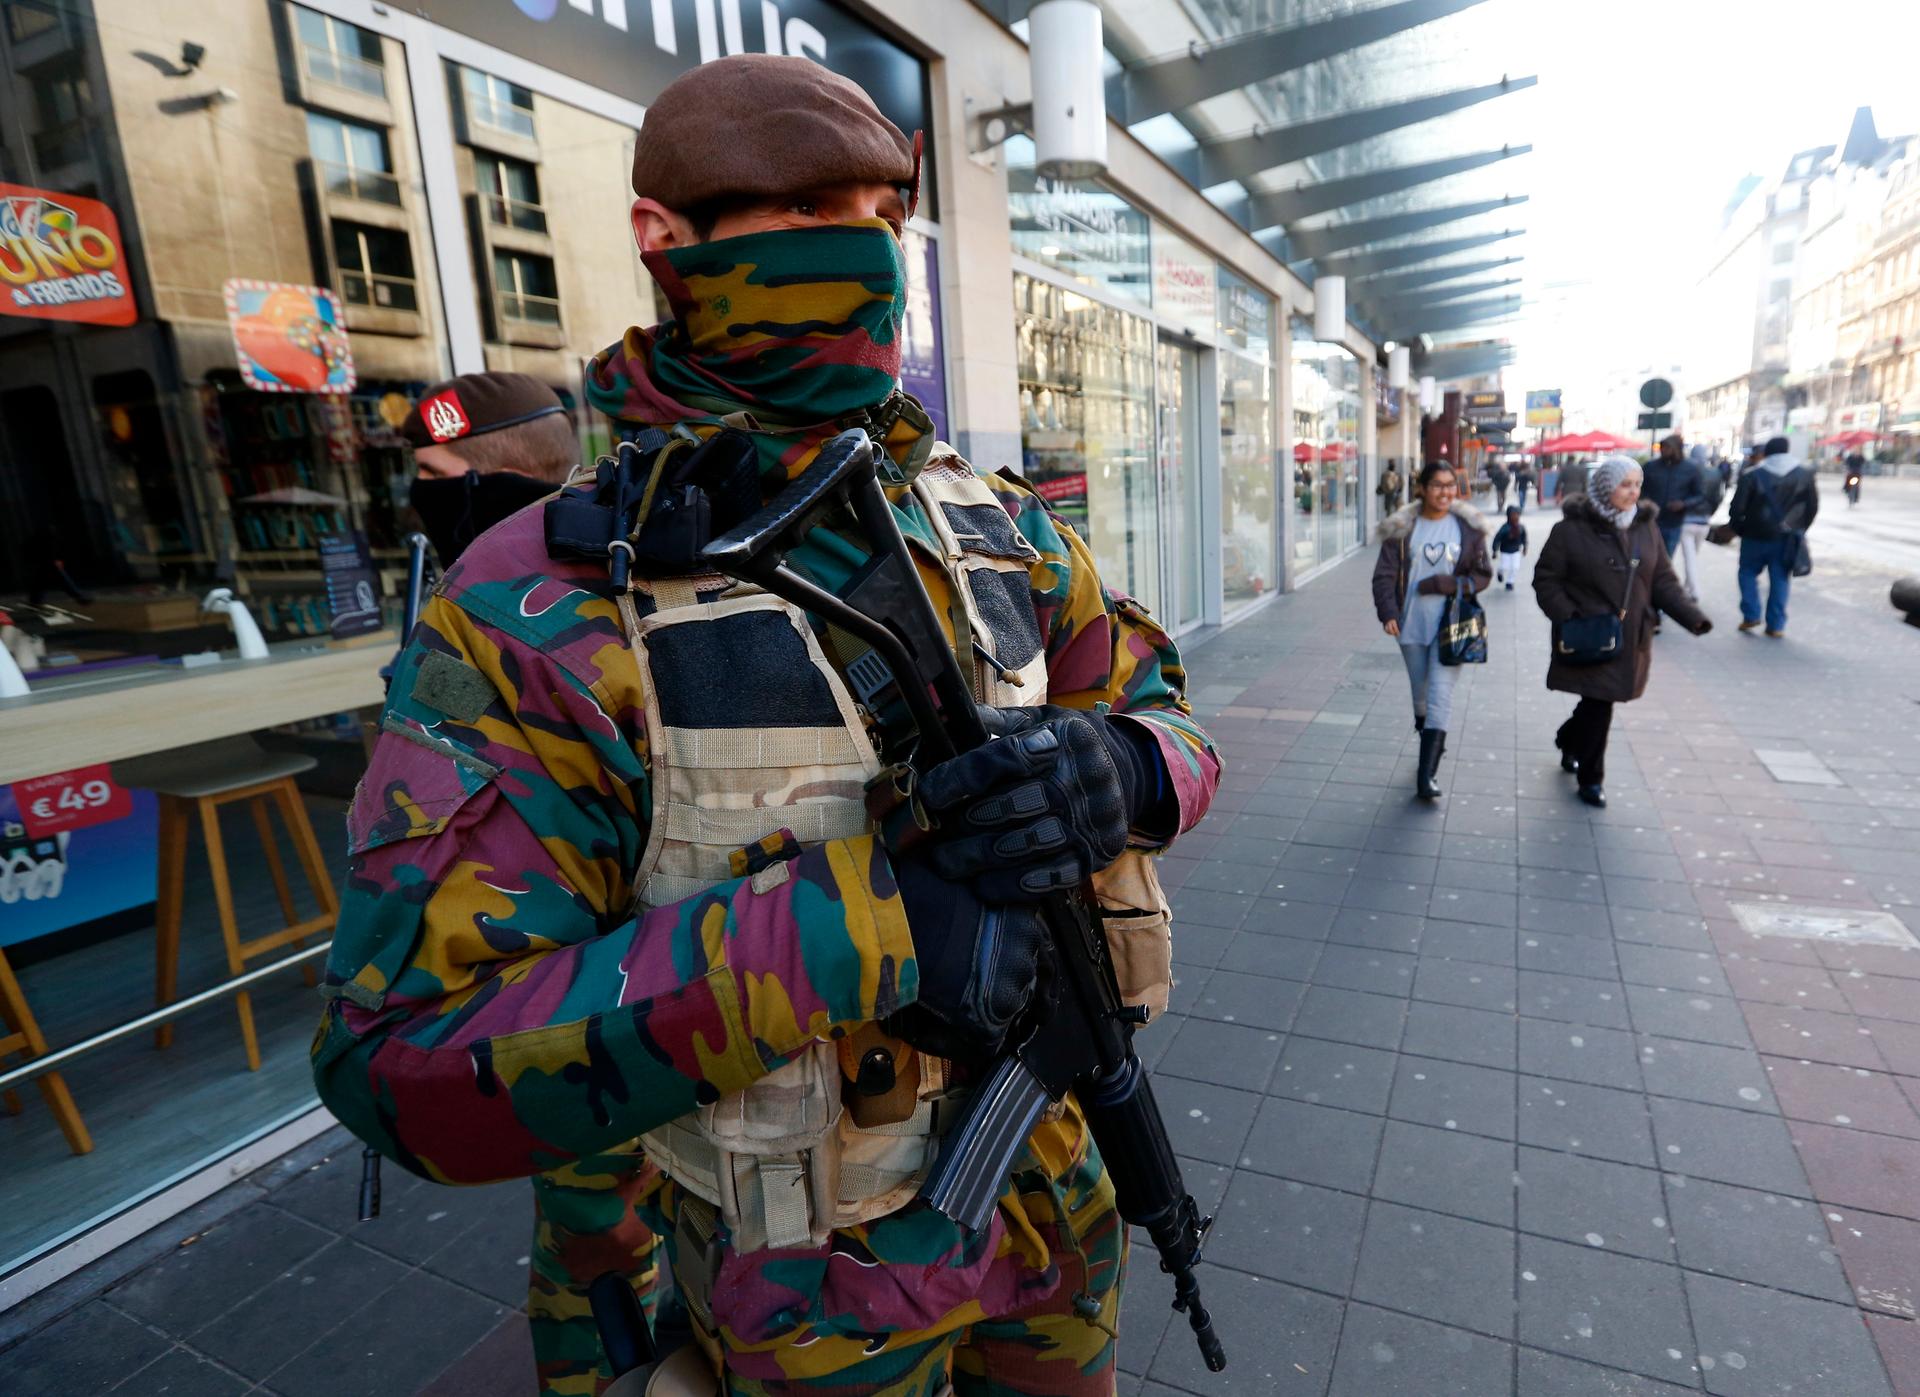 Belgium hotbed for terrorists